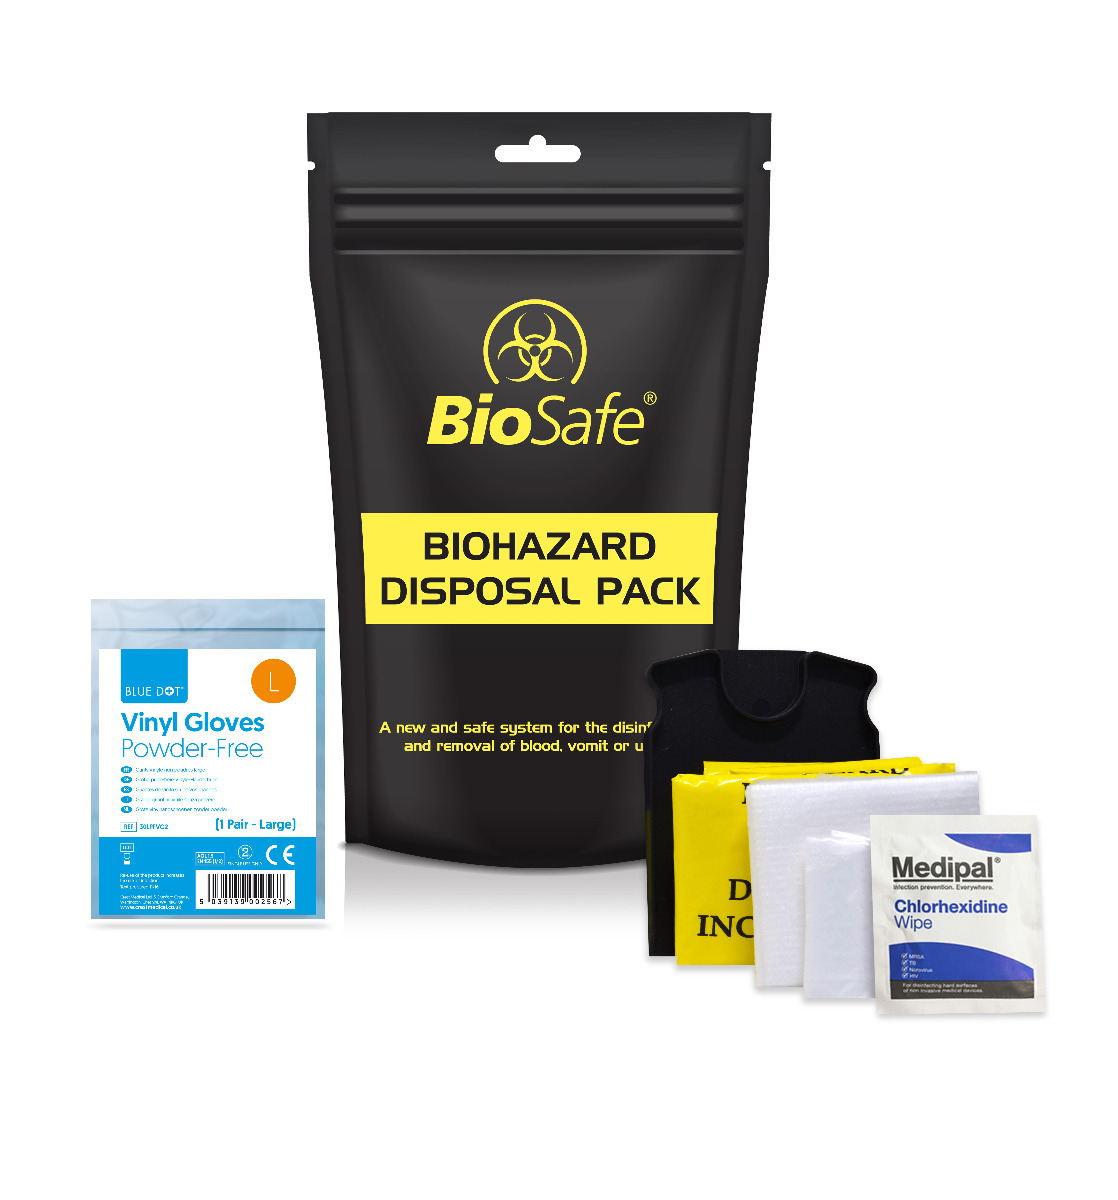 Biohazard Disposal Pack